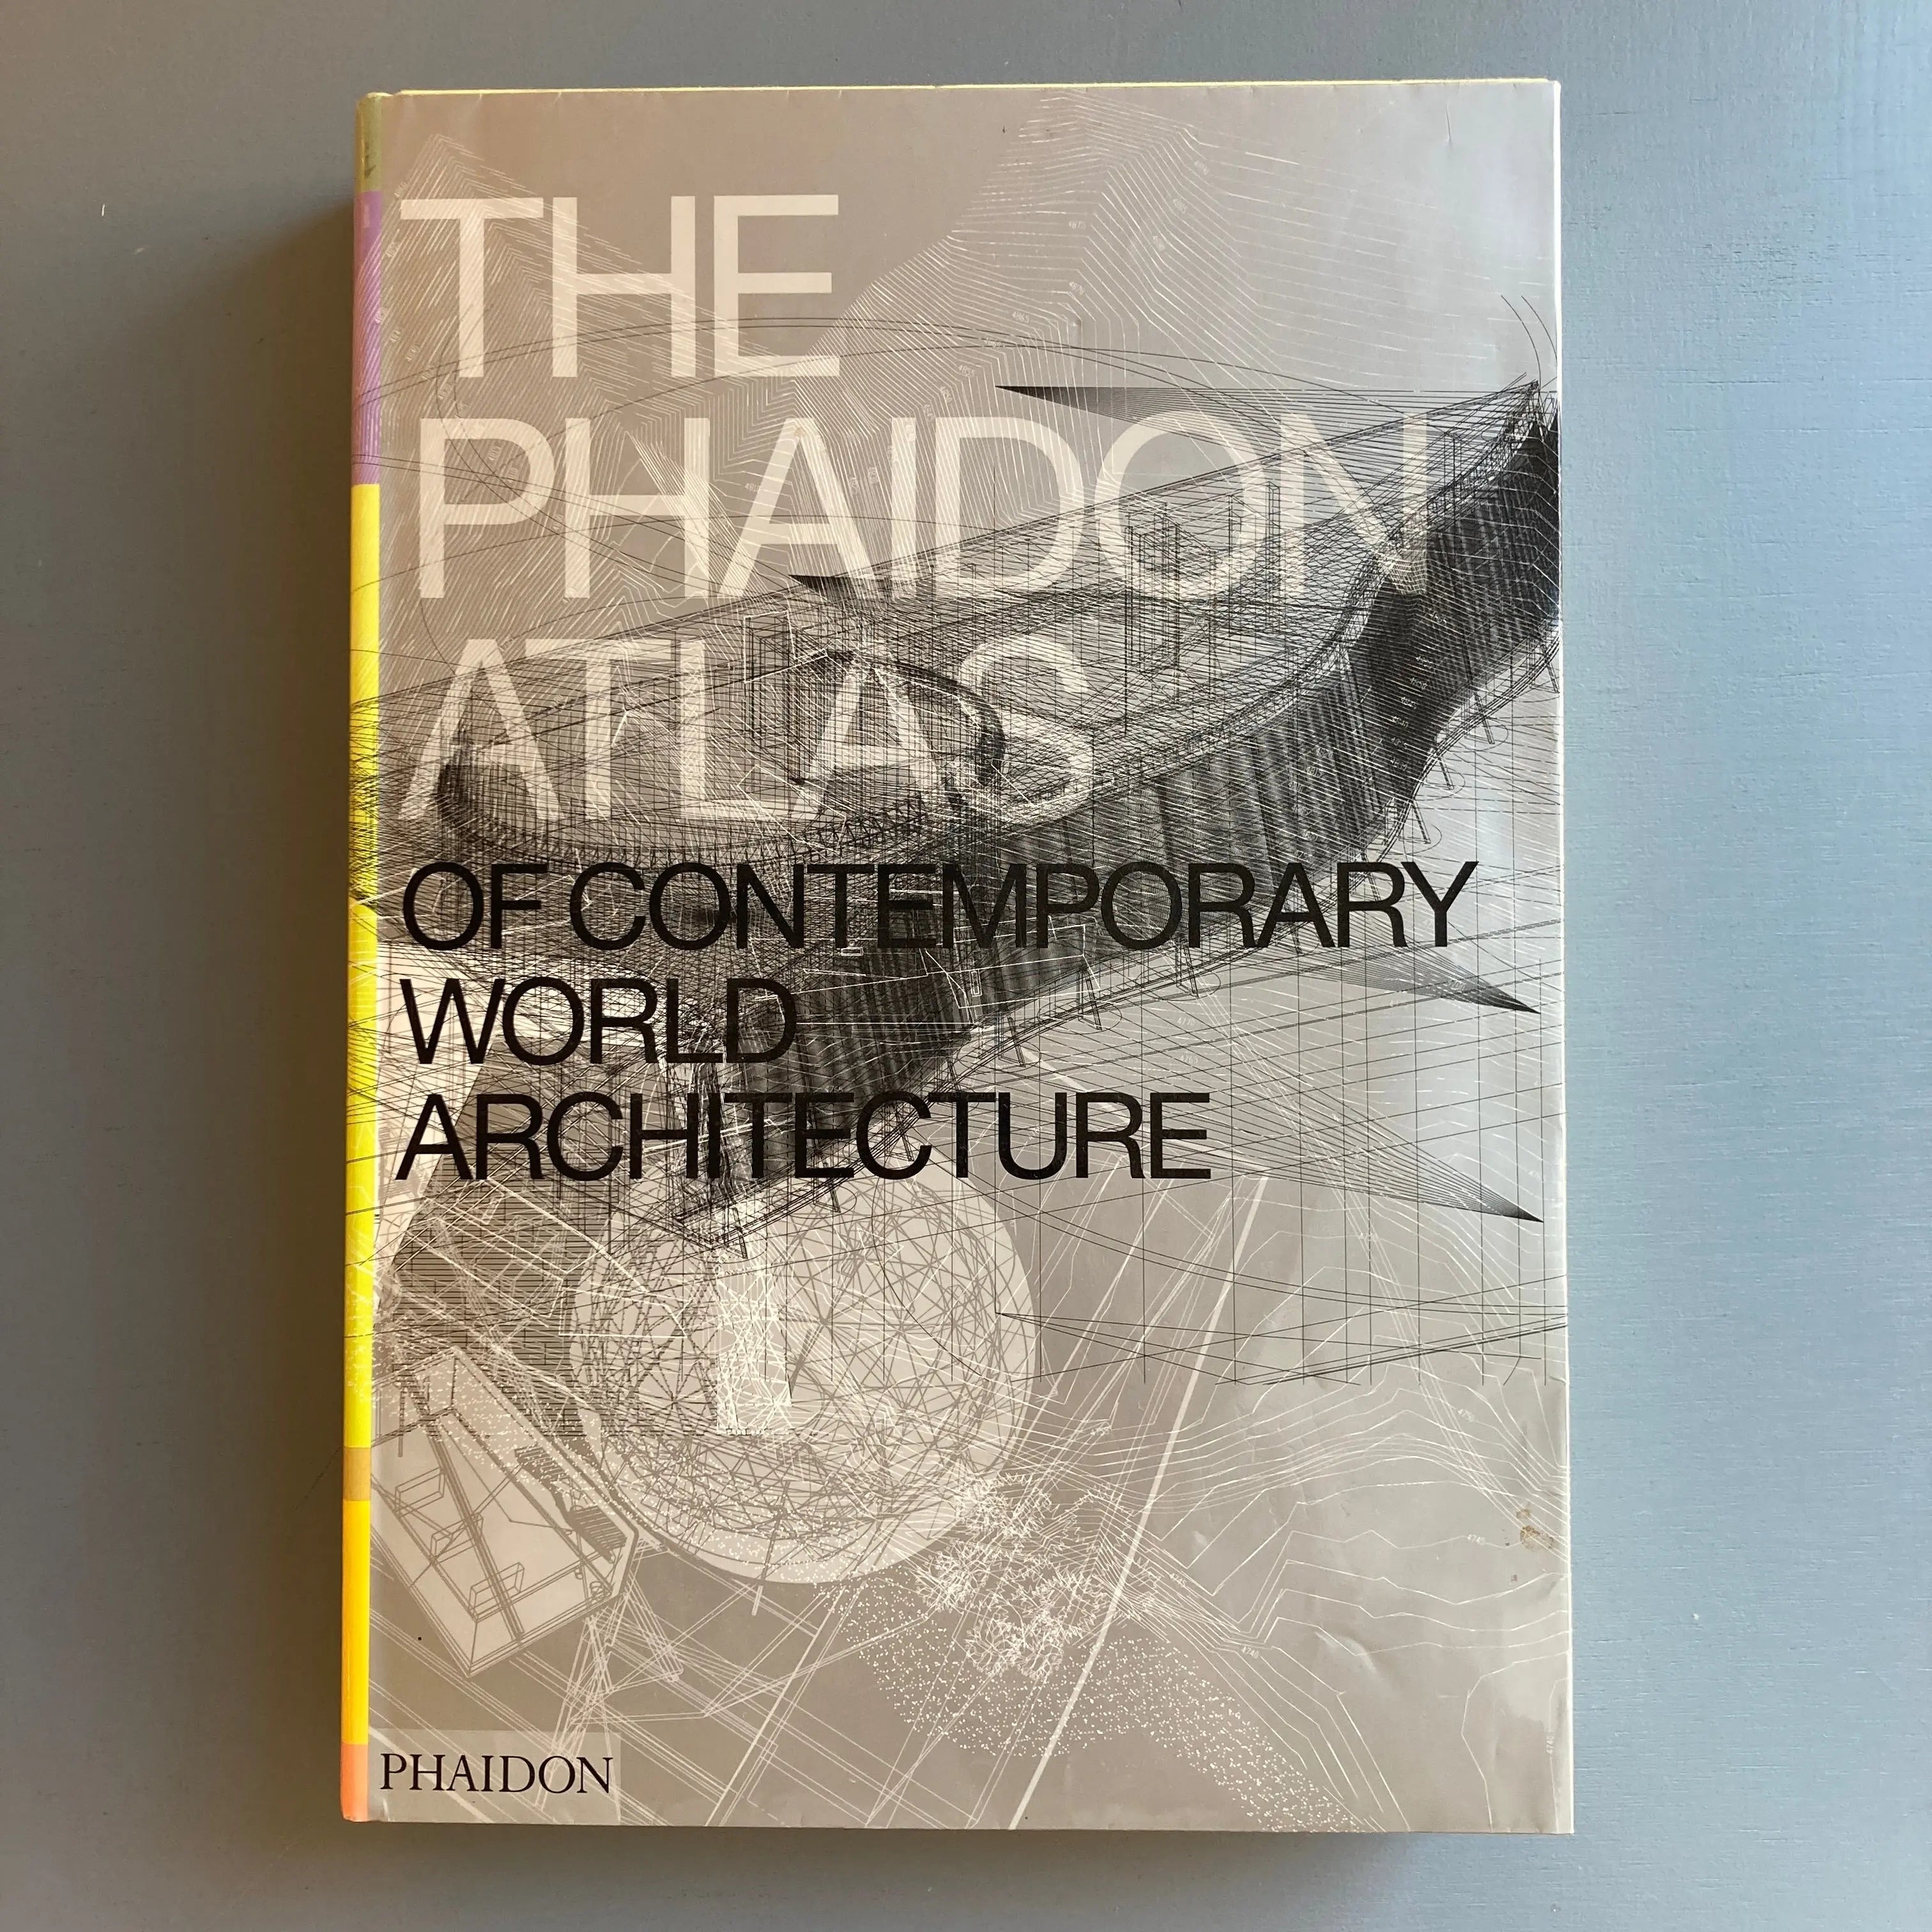 The Phaidon Atlas of Contemporary World Architecture - Phaidon 2004